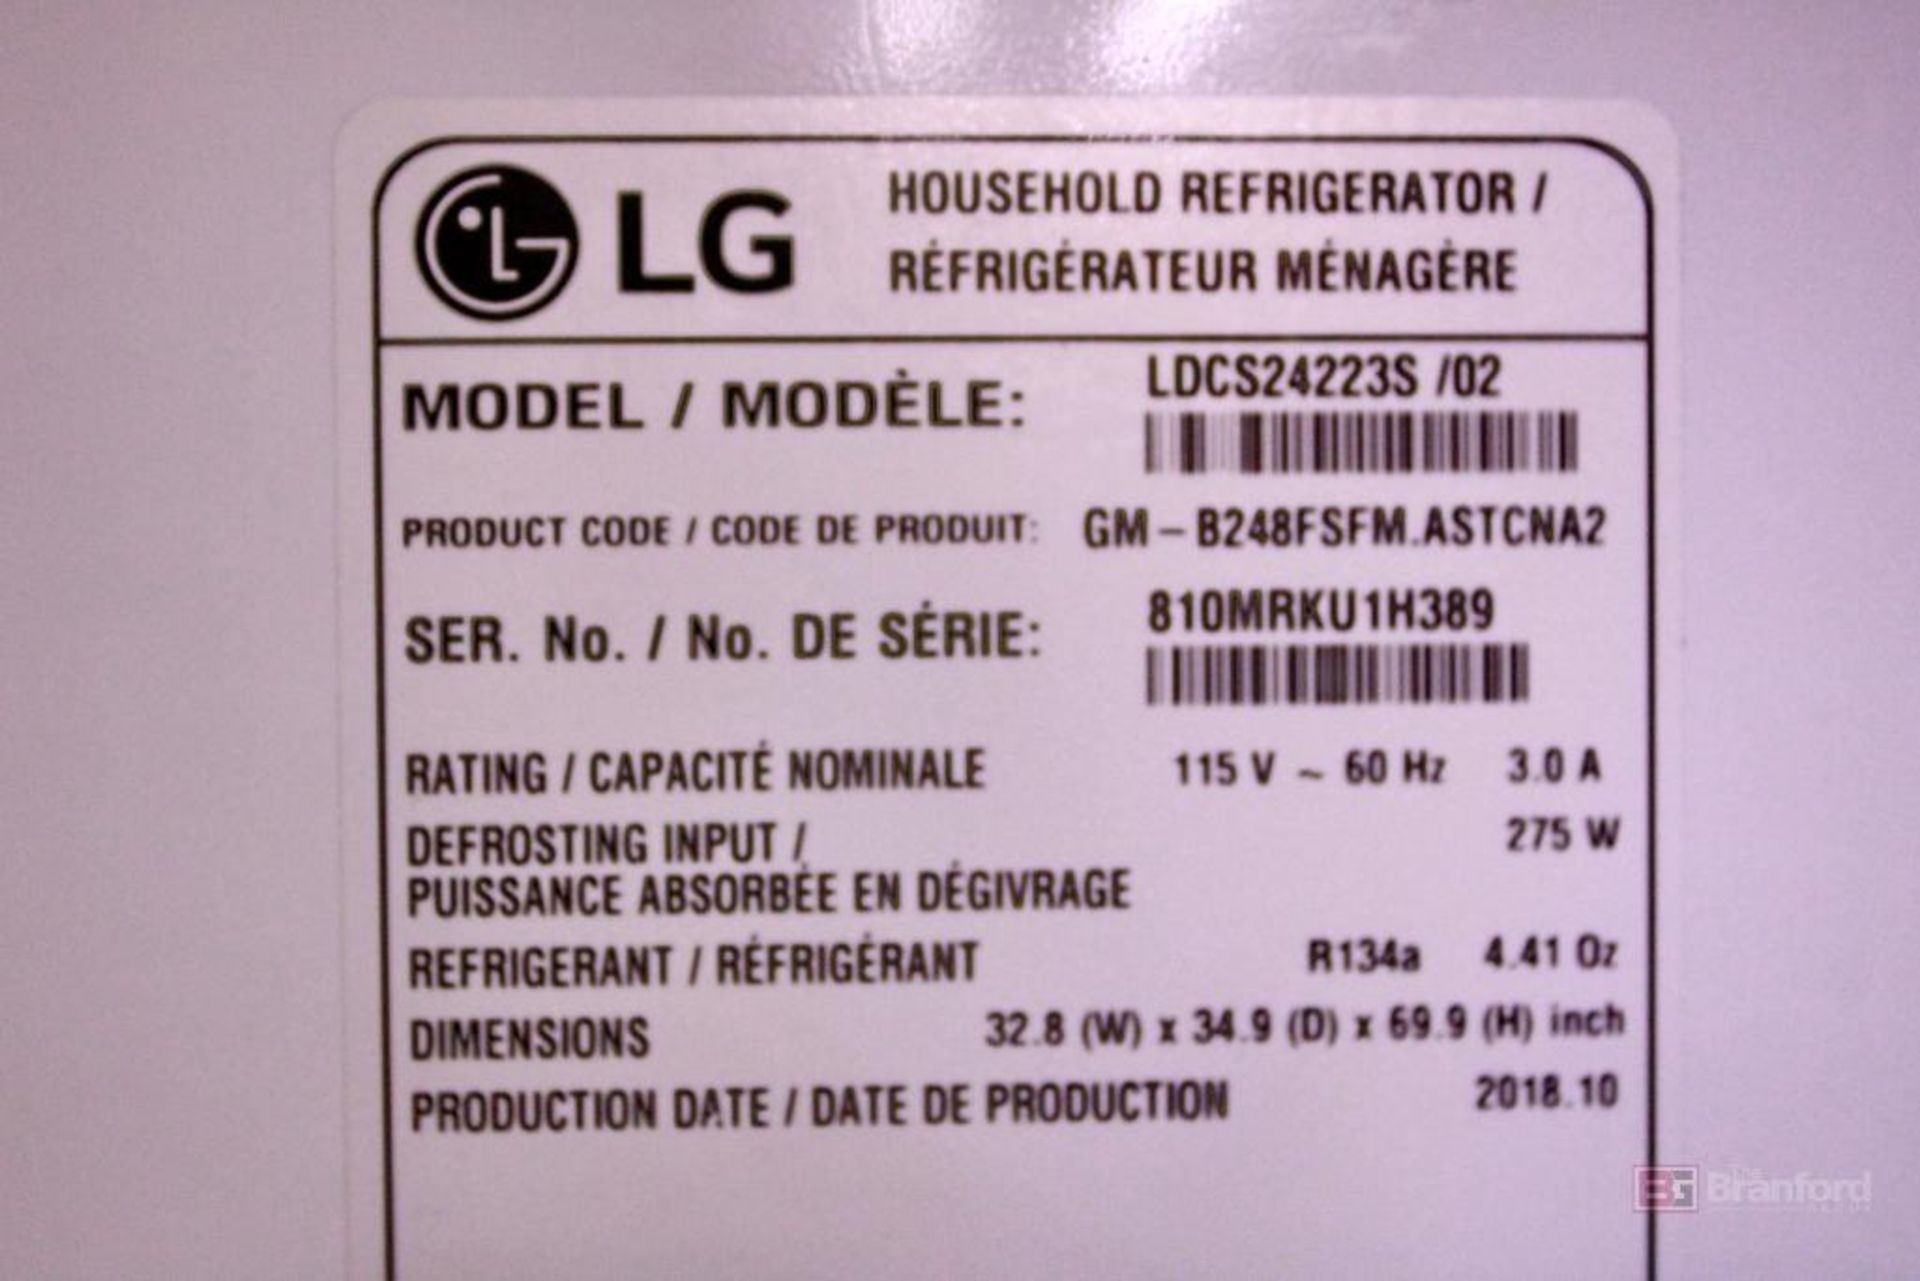 LG Refrigerator Model LDCS24223S - Image 3 of 3